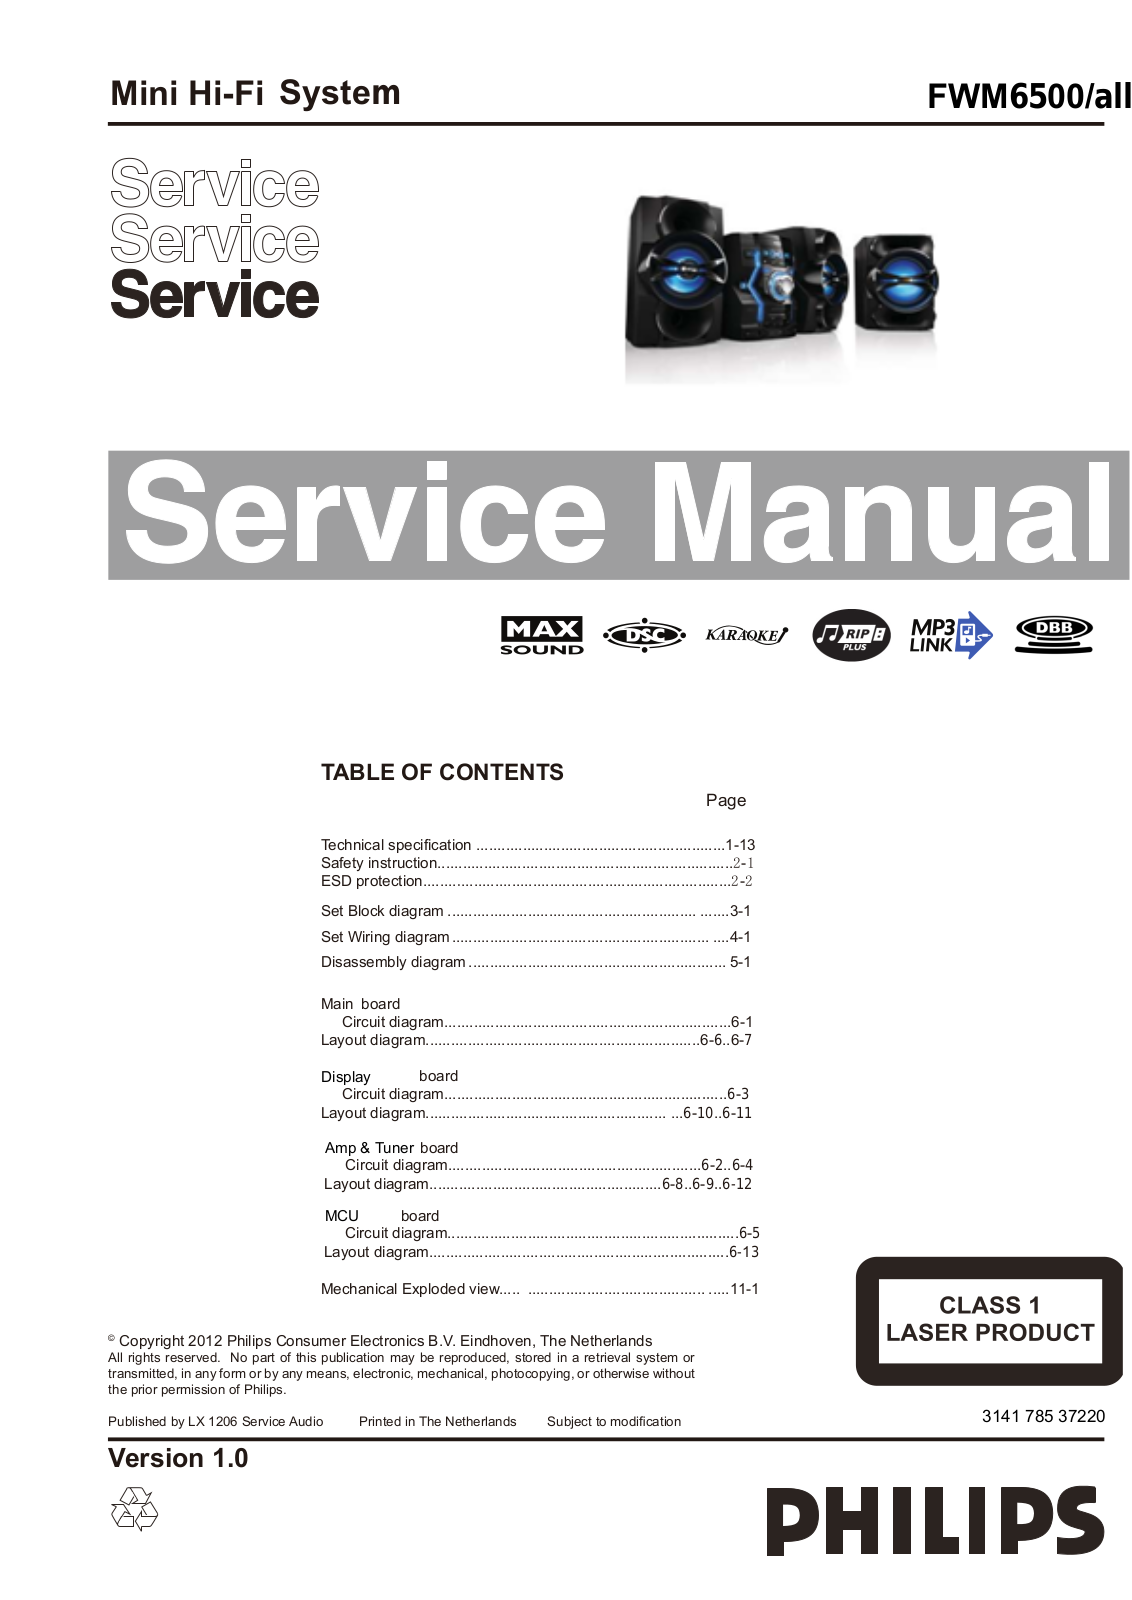 Philips FWM-6500 Service Manual